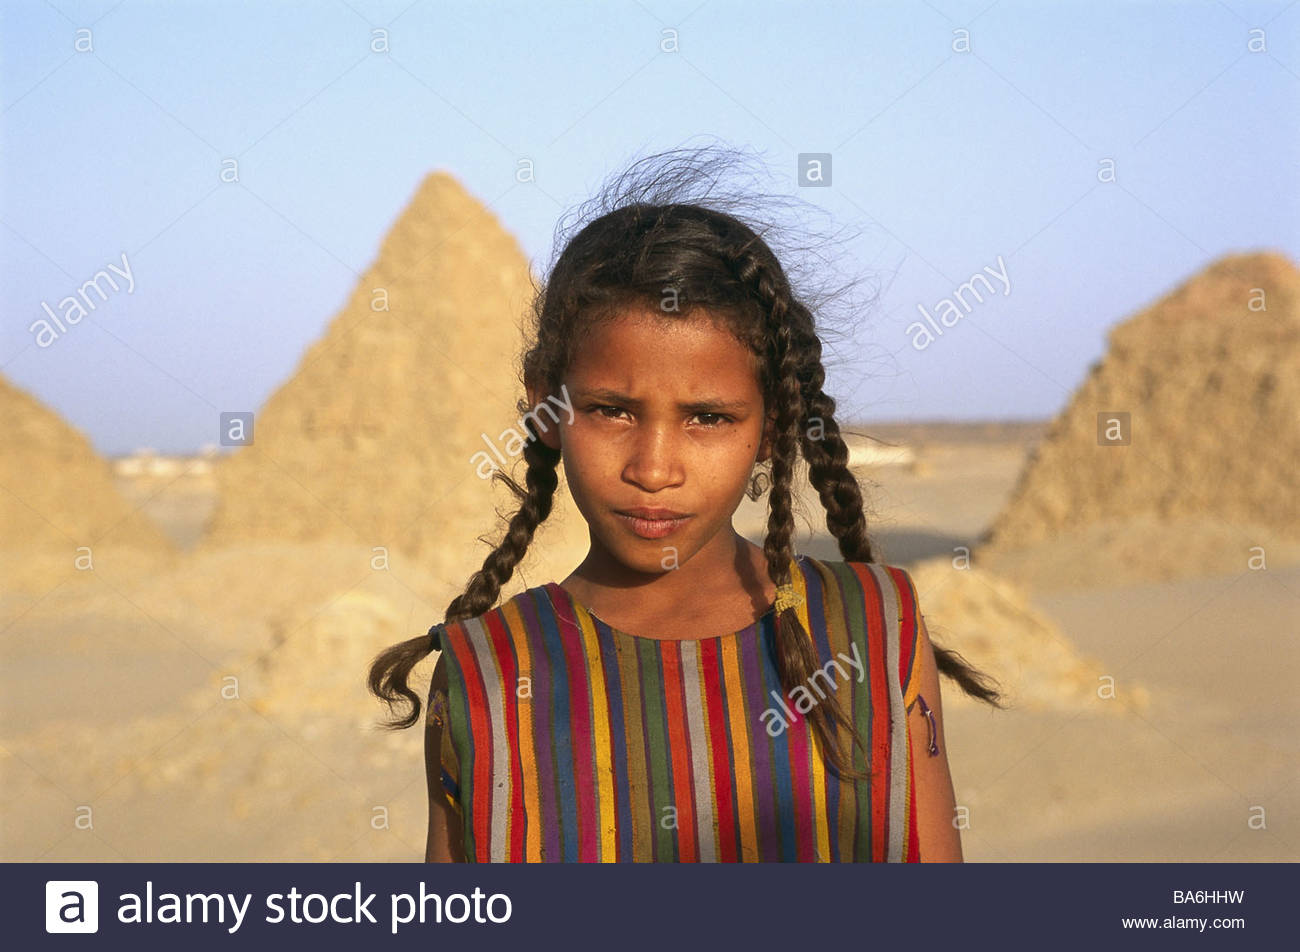 sudan-nuri-pyramids-girls-portrait-no-models-north-africa-people-sudanese-BA6HHW.jpg